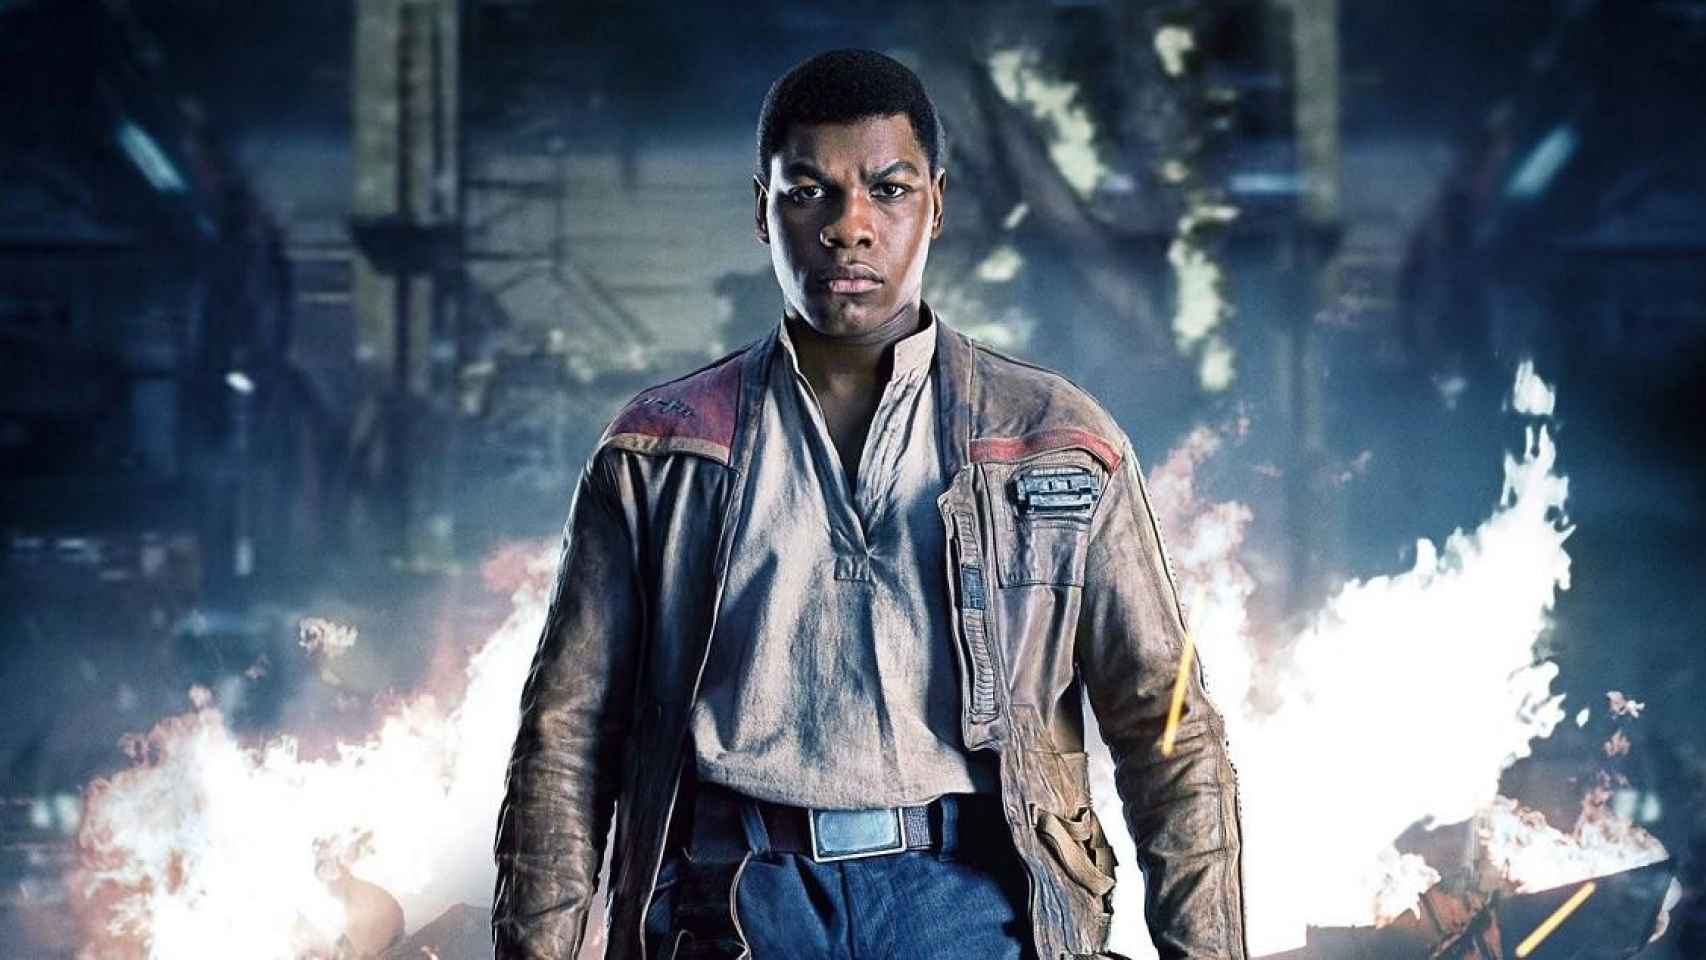 John Boyega encarna a Finn en Star Wars / DISNEY